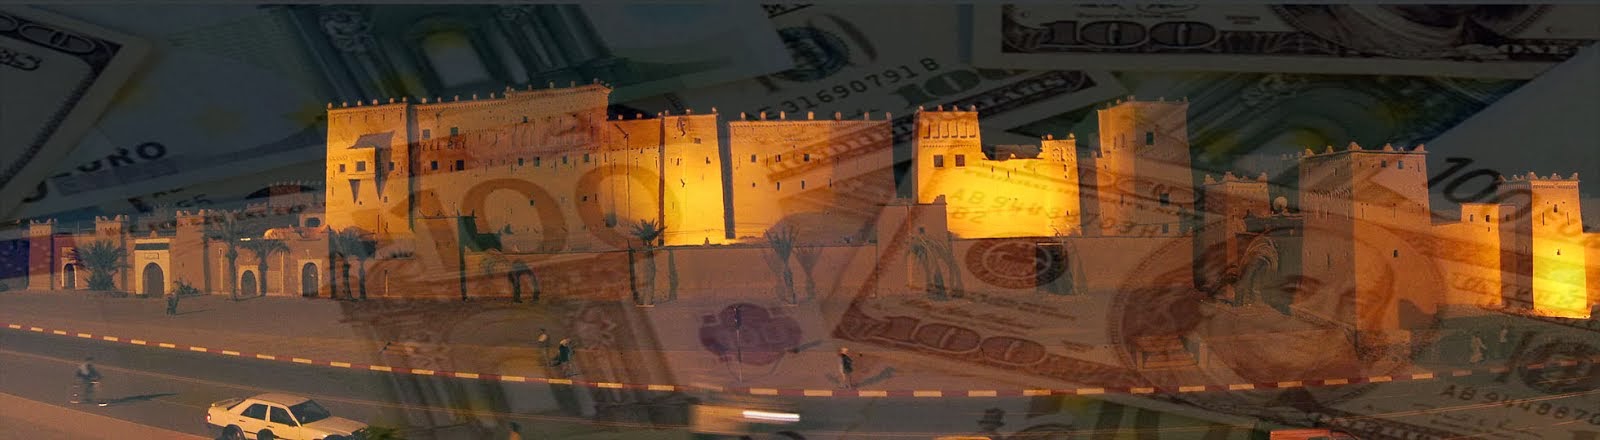 money in ouarzazate